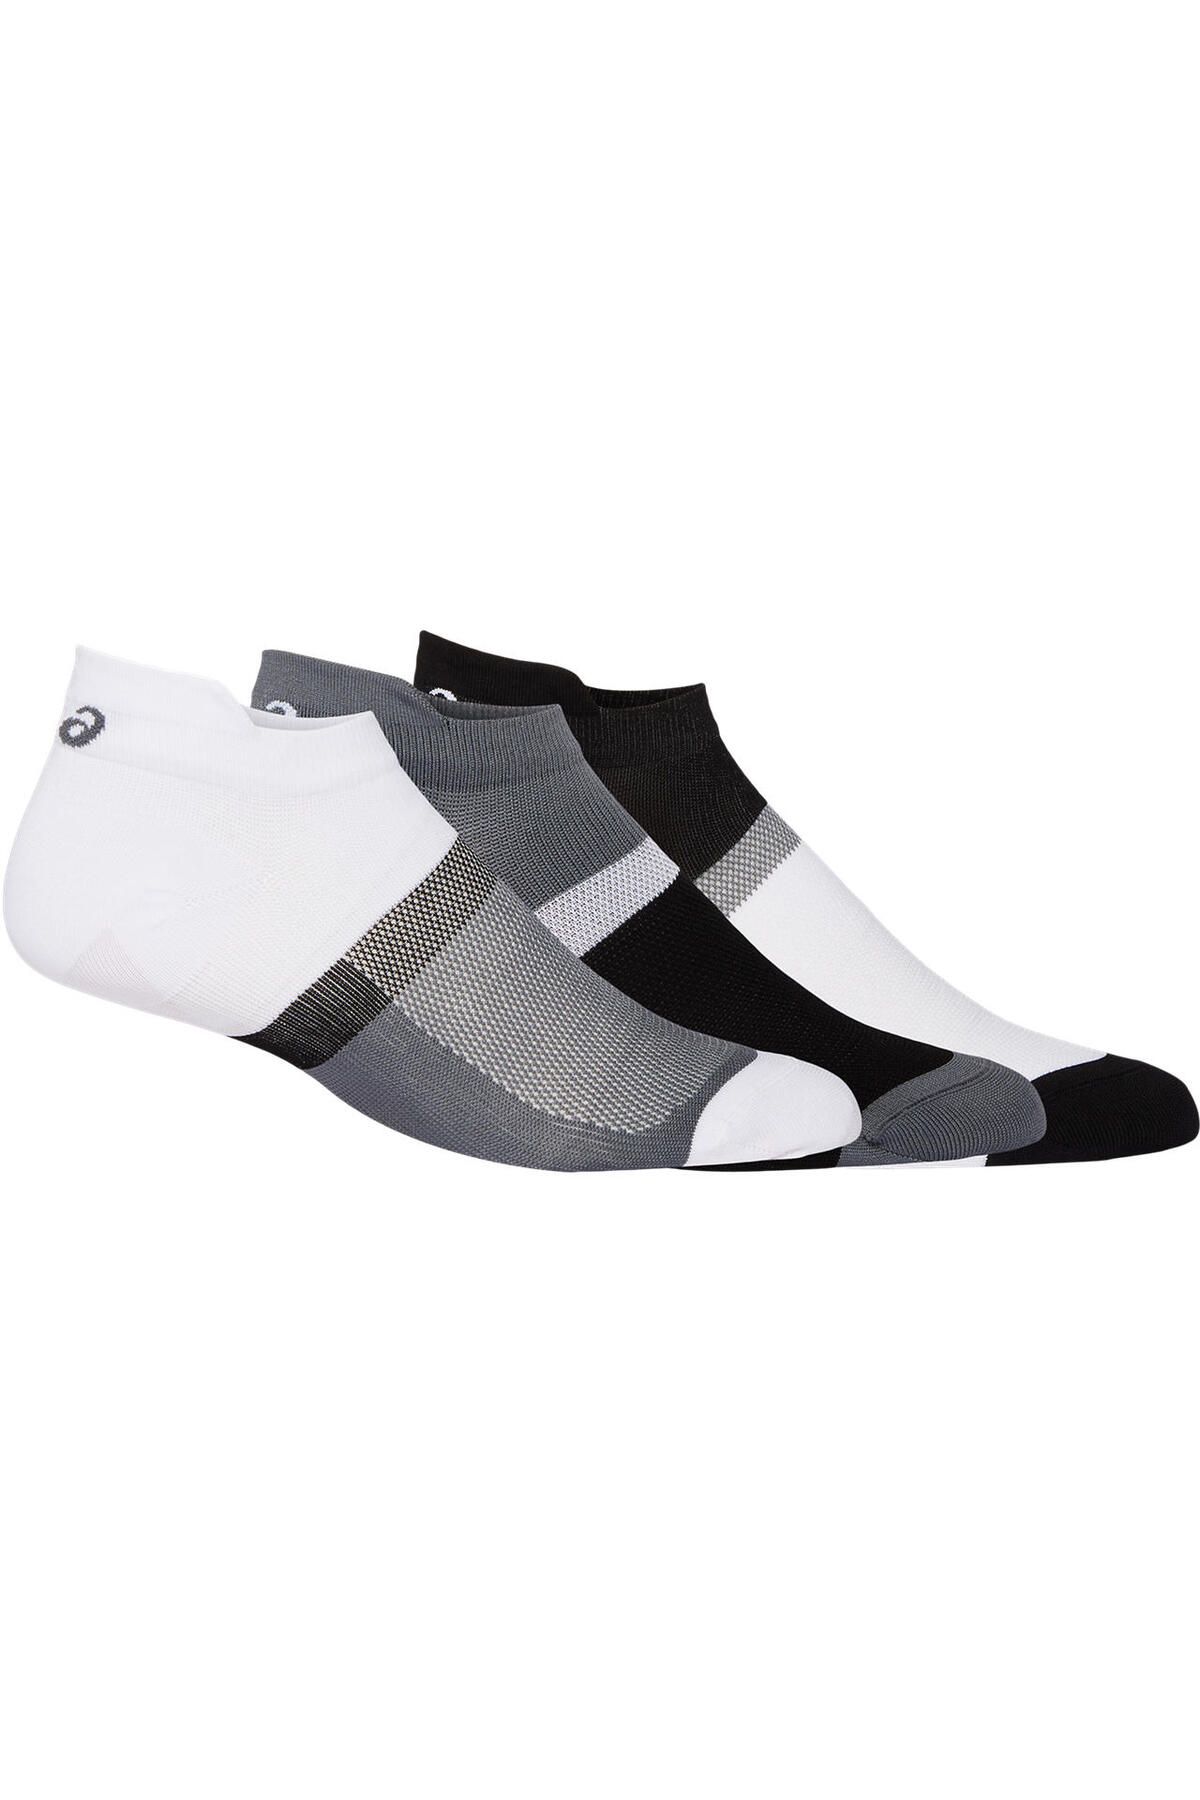 Asics 3ppk Color Block Ankle Sock Unisex Siyah Çorap 3033b560-001 3033B560-001